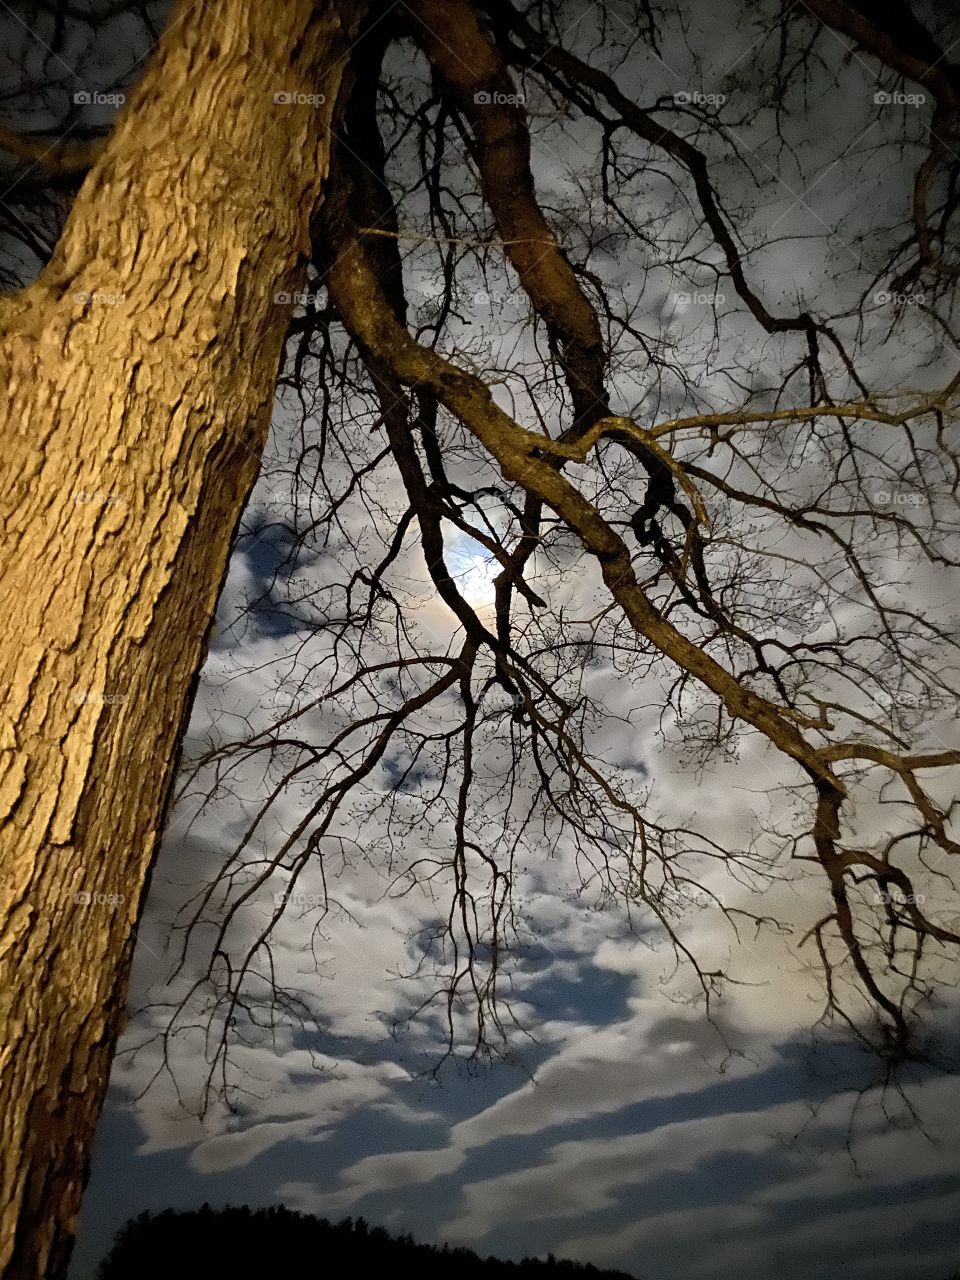 Moon through the branches